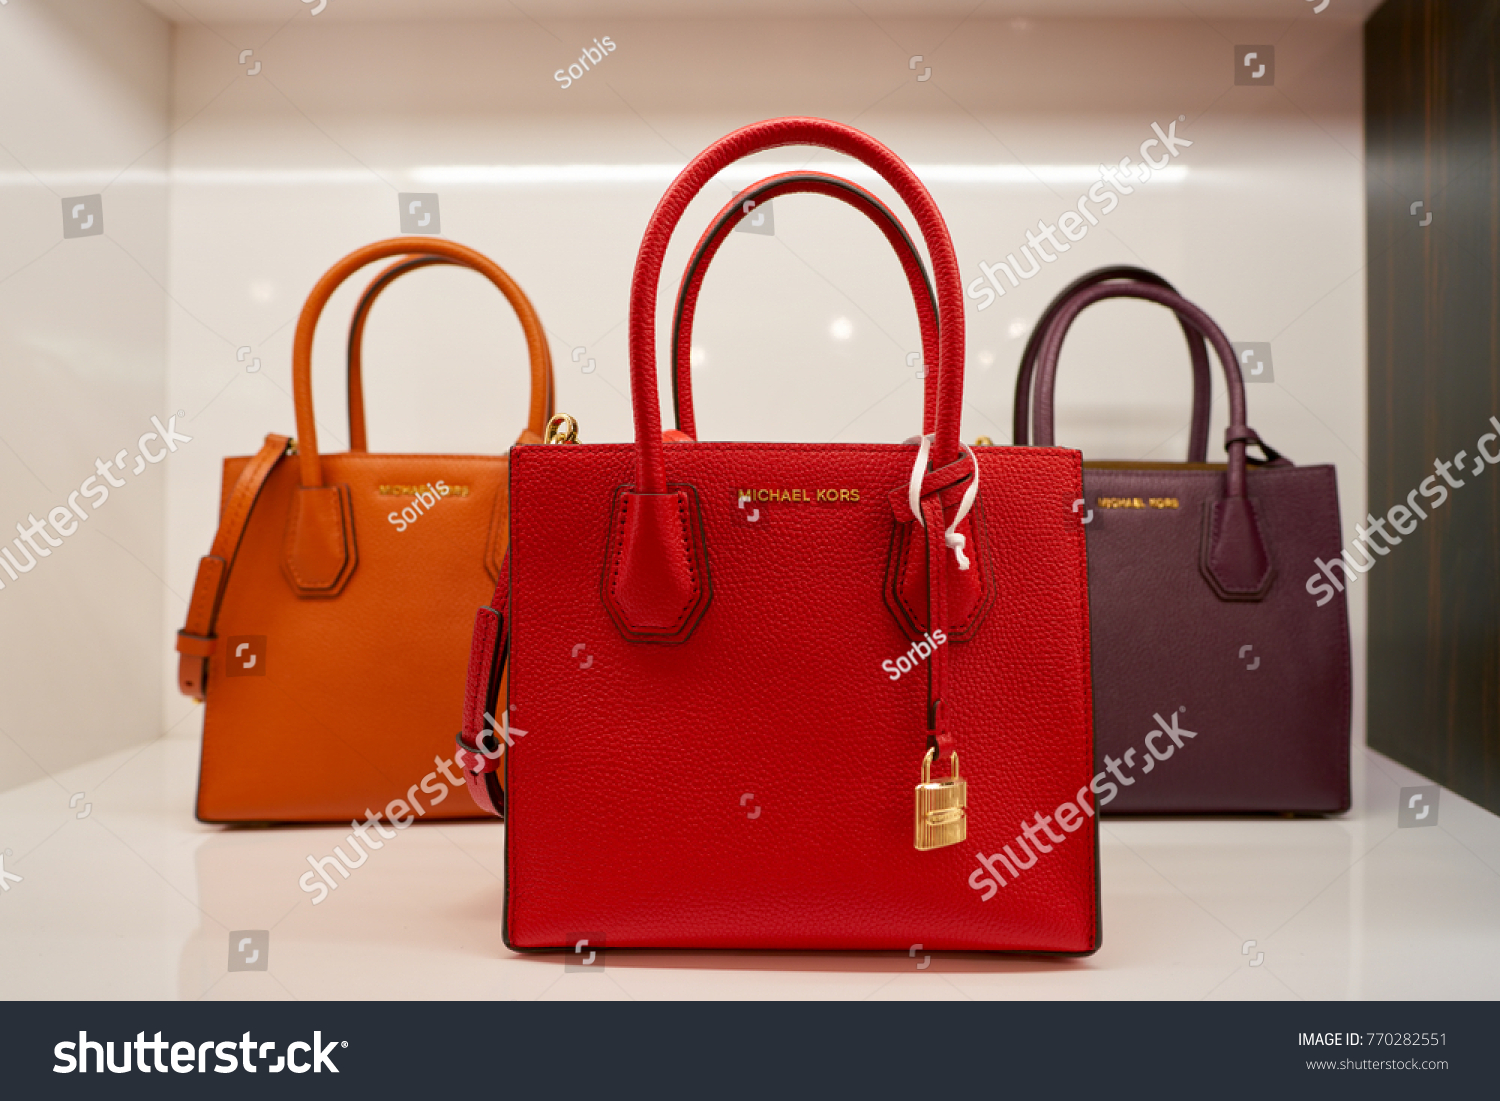 944 Michael kors bag Images, Stock Photos & Vectors | Shutterstock